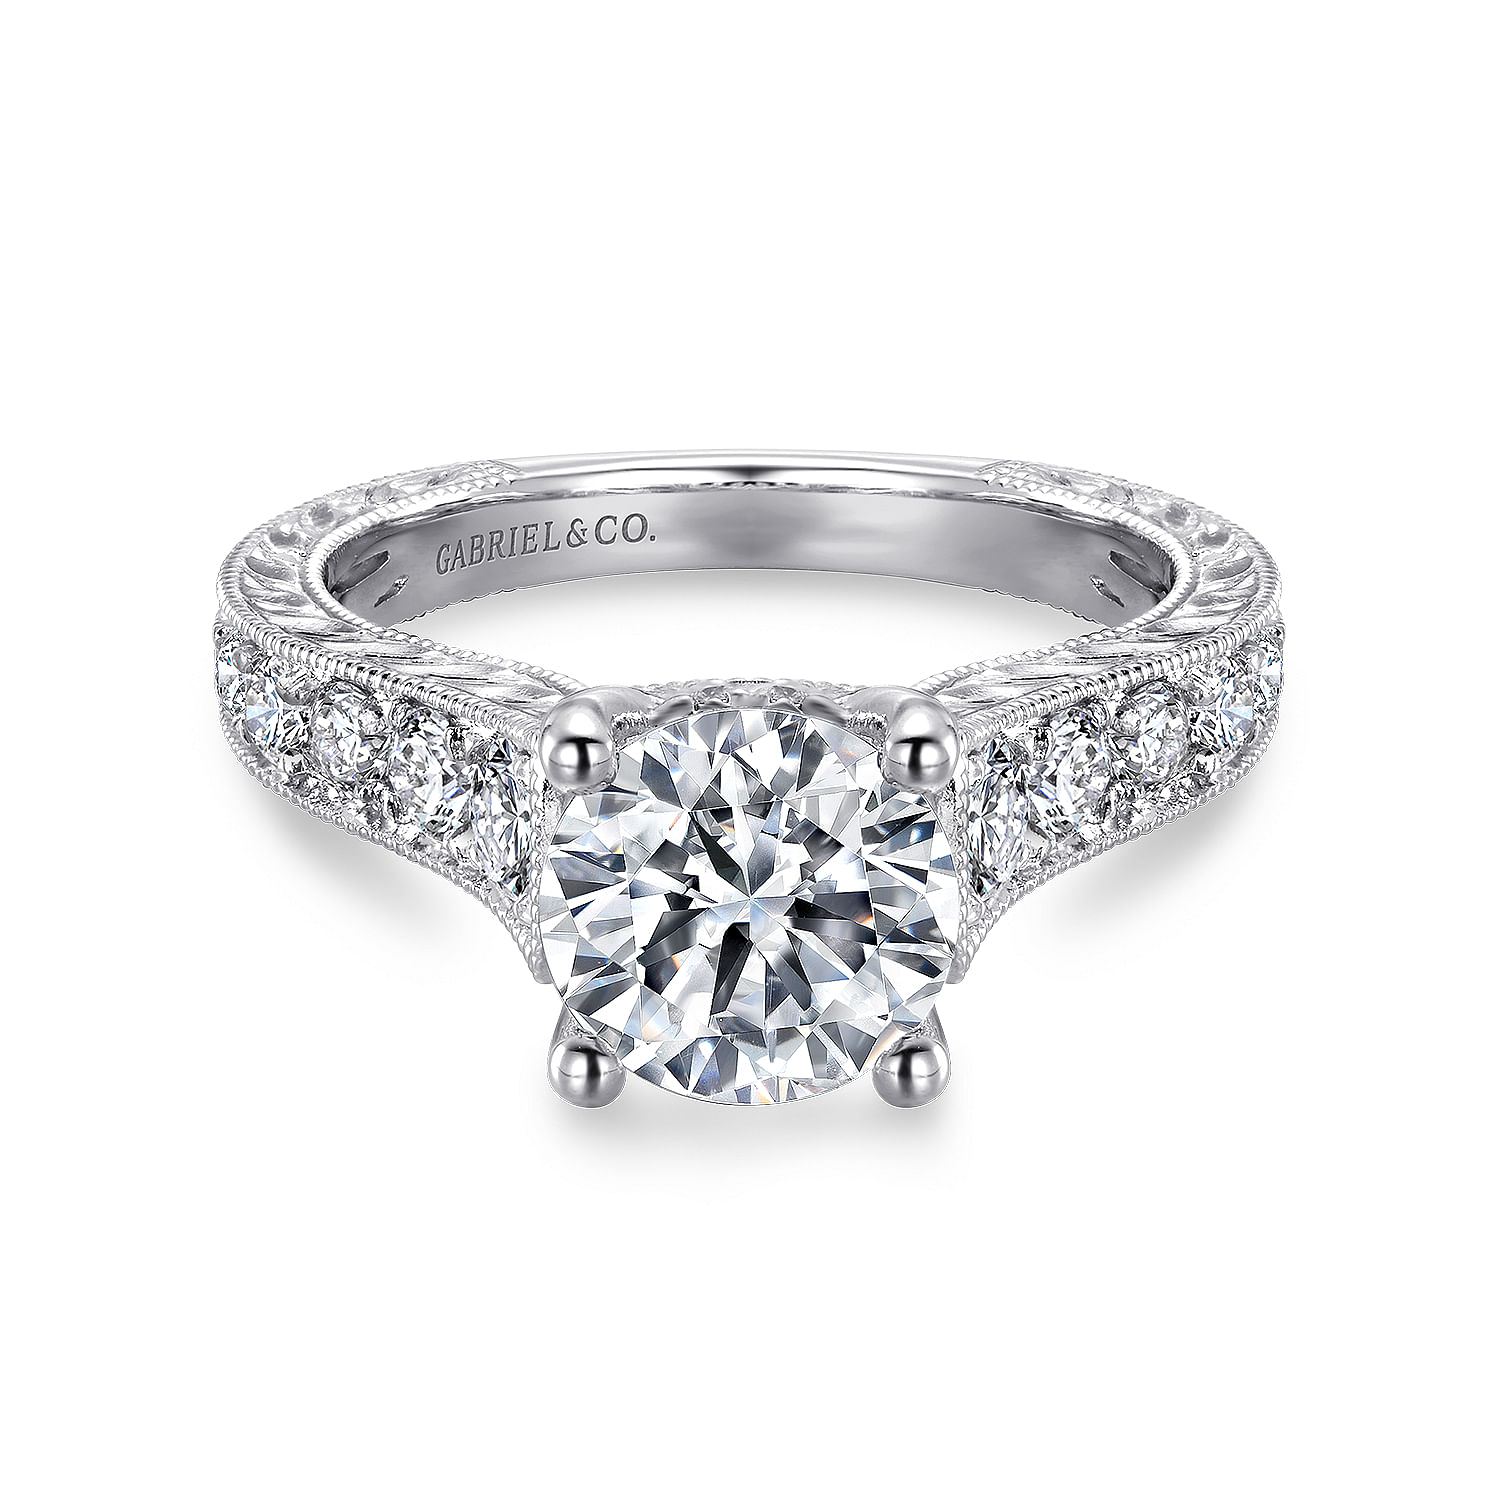 Abigail - 14K White Gold Round Diamond Engagement Ring